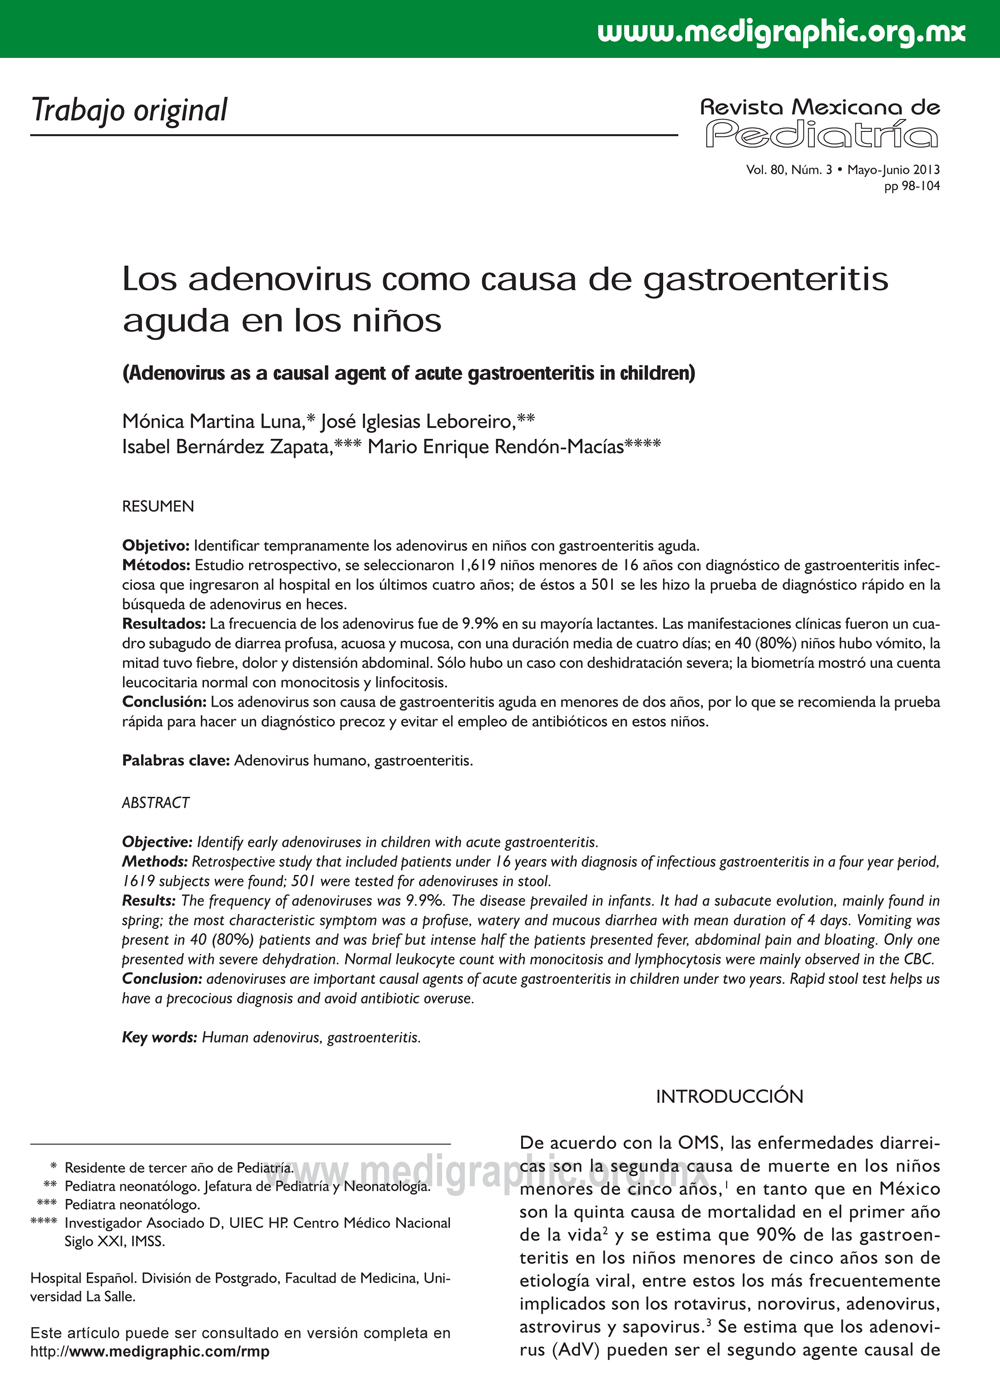  - img_adenovirus_causa_gastroenteritis